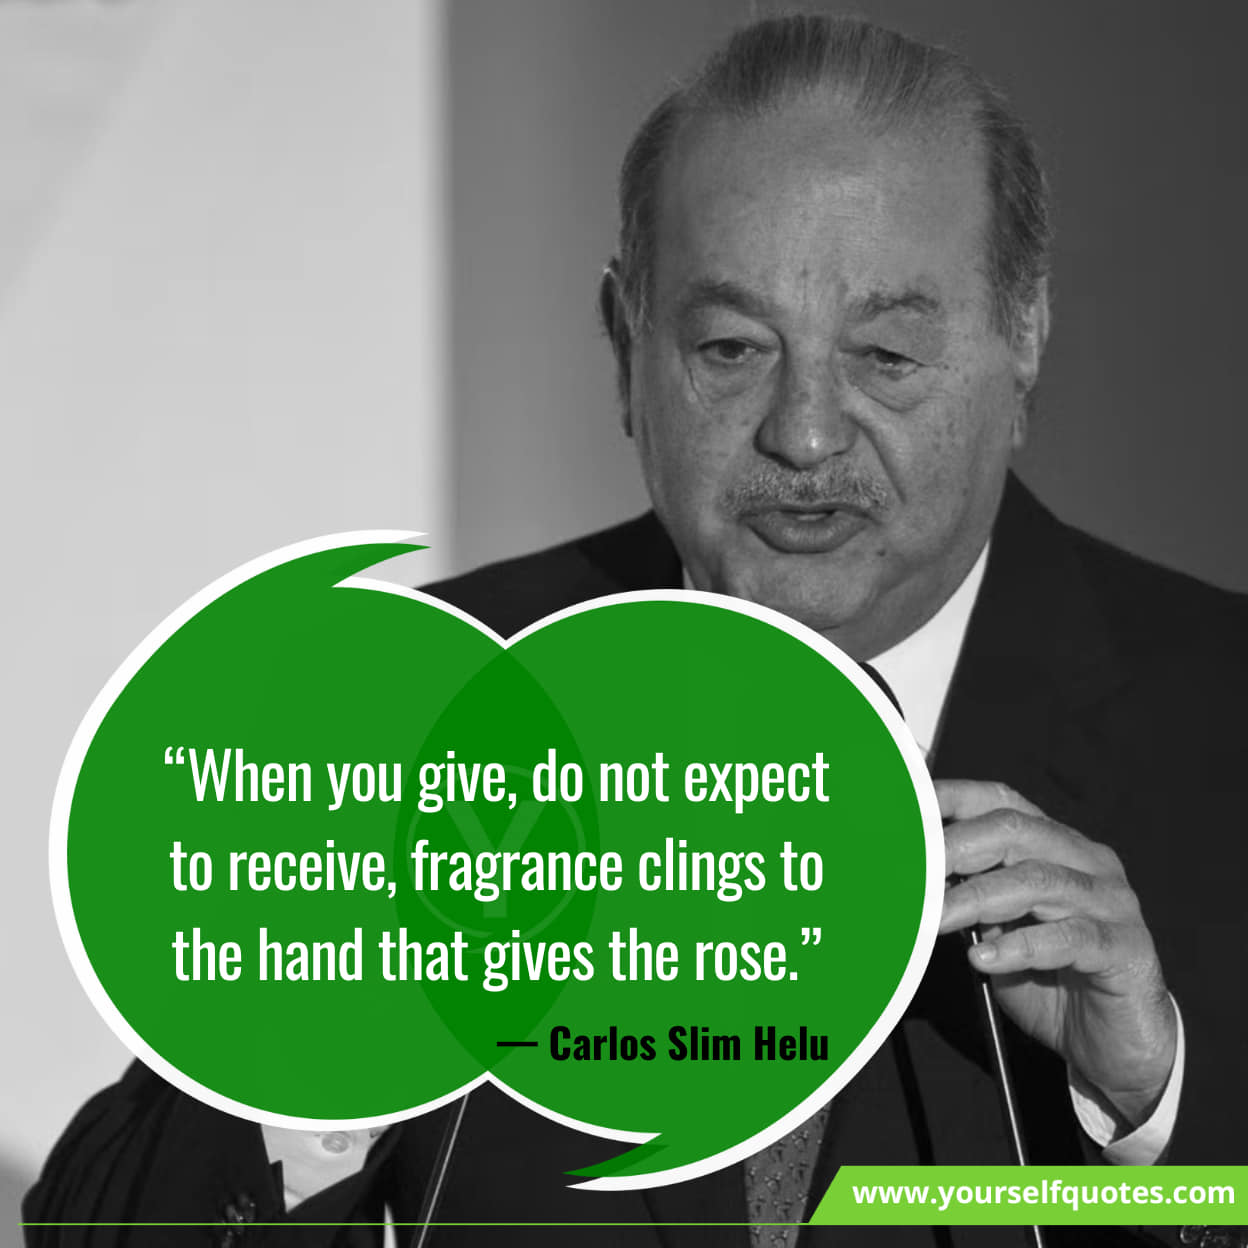 Carlos Slim Helu Quotes For Success